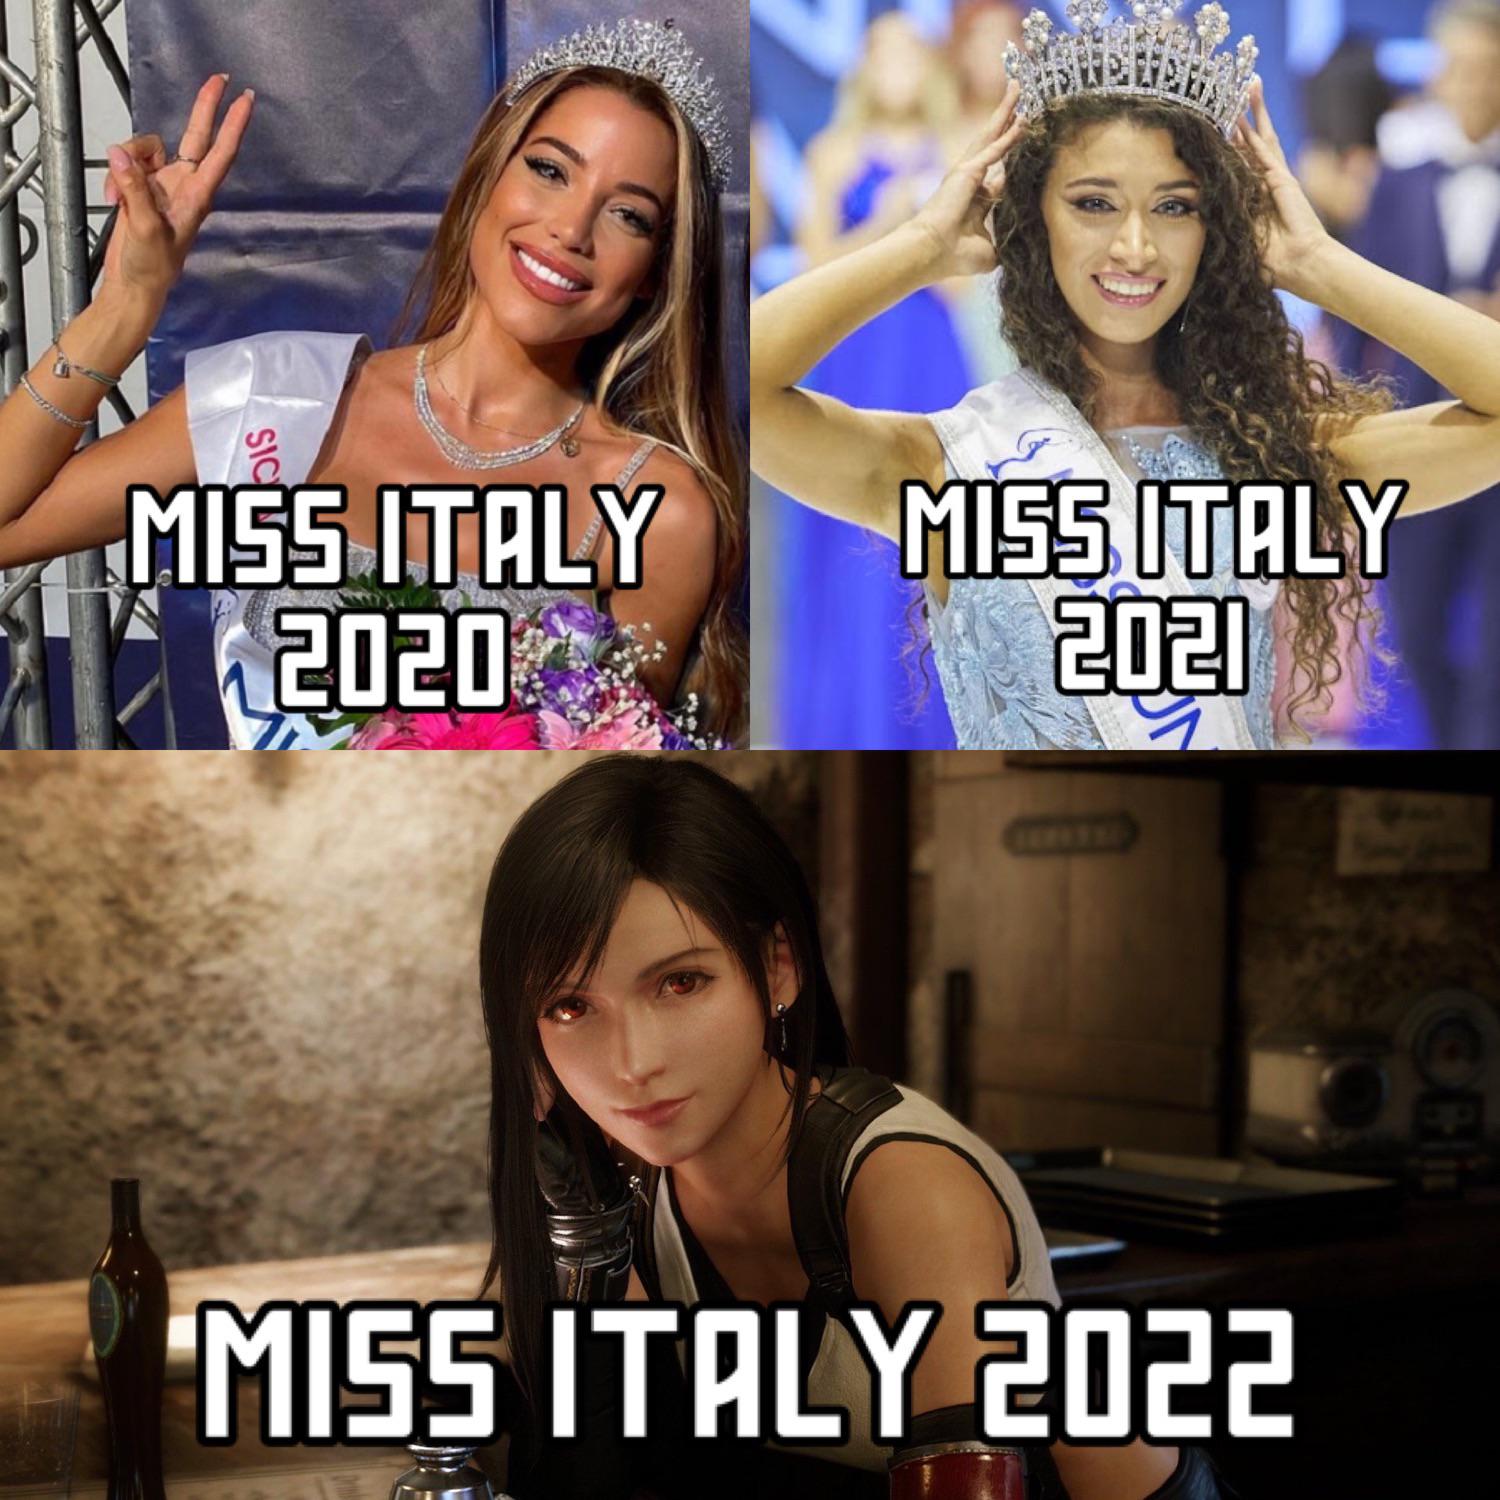 funny gaming memes - photo caption - Sic Miss Italy 2020 Miss Italy 2021 Miss Italy 2022